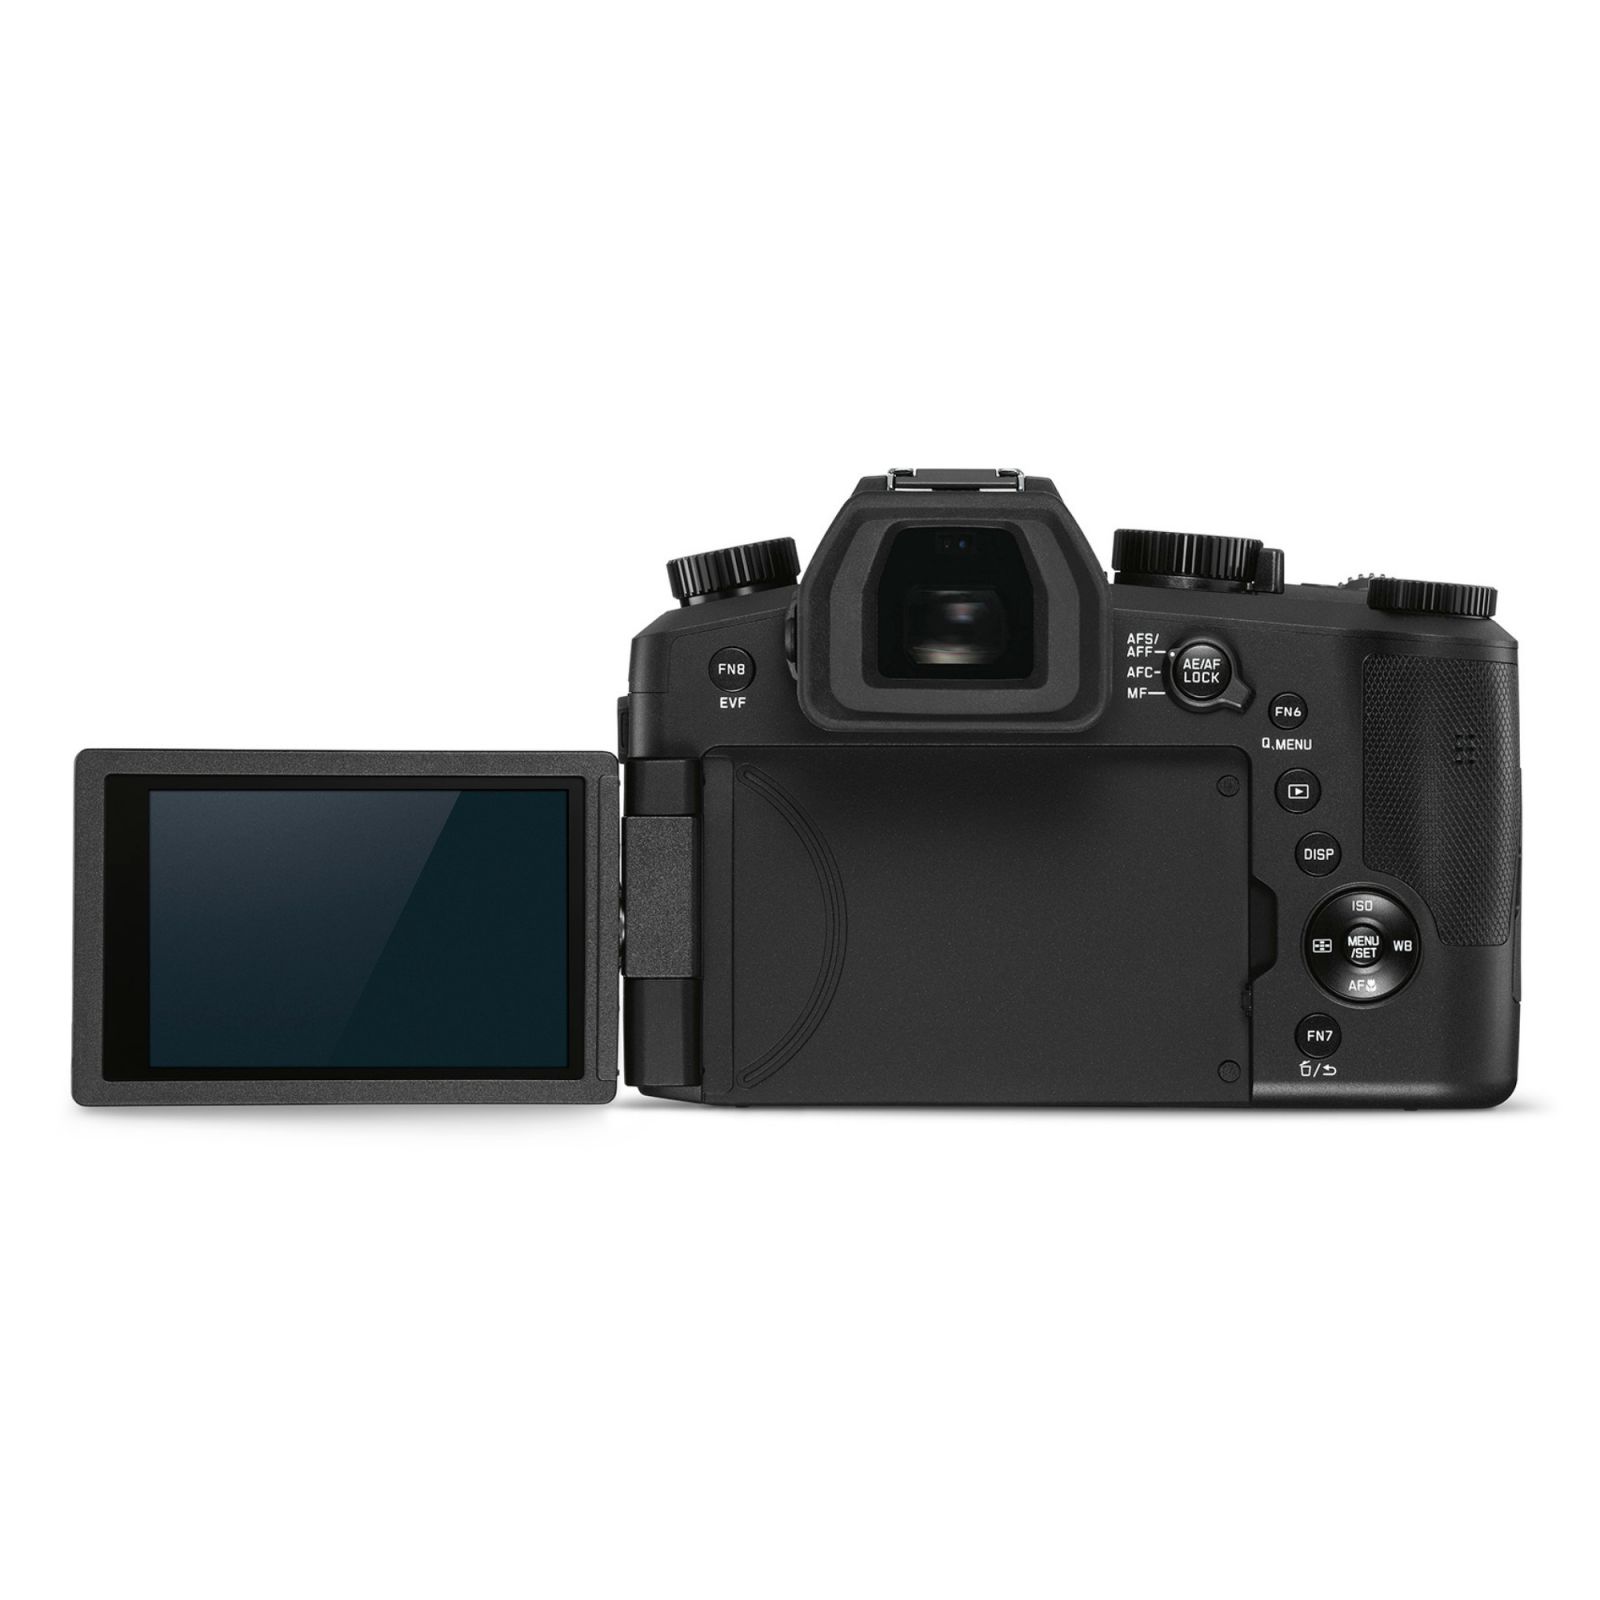 Leica-V-LUX-5-camera-1.jpg